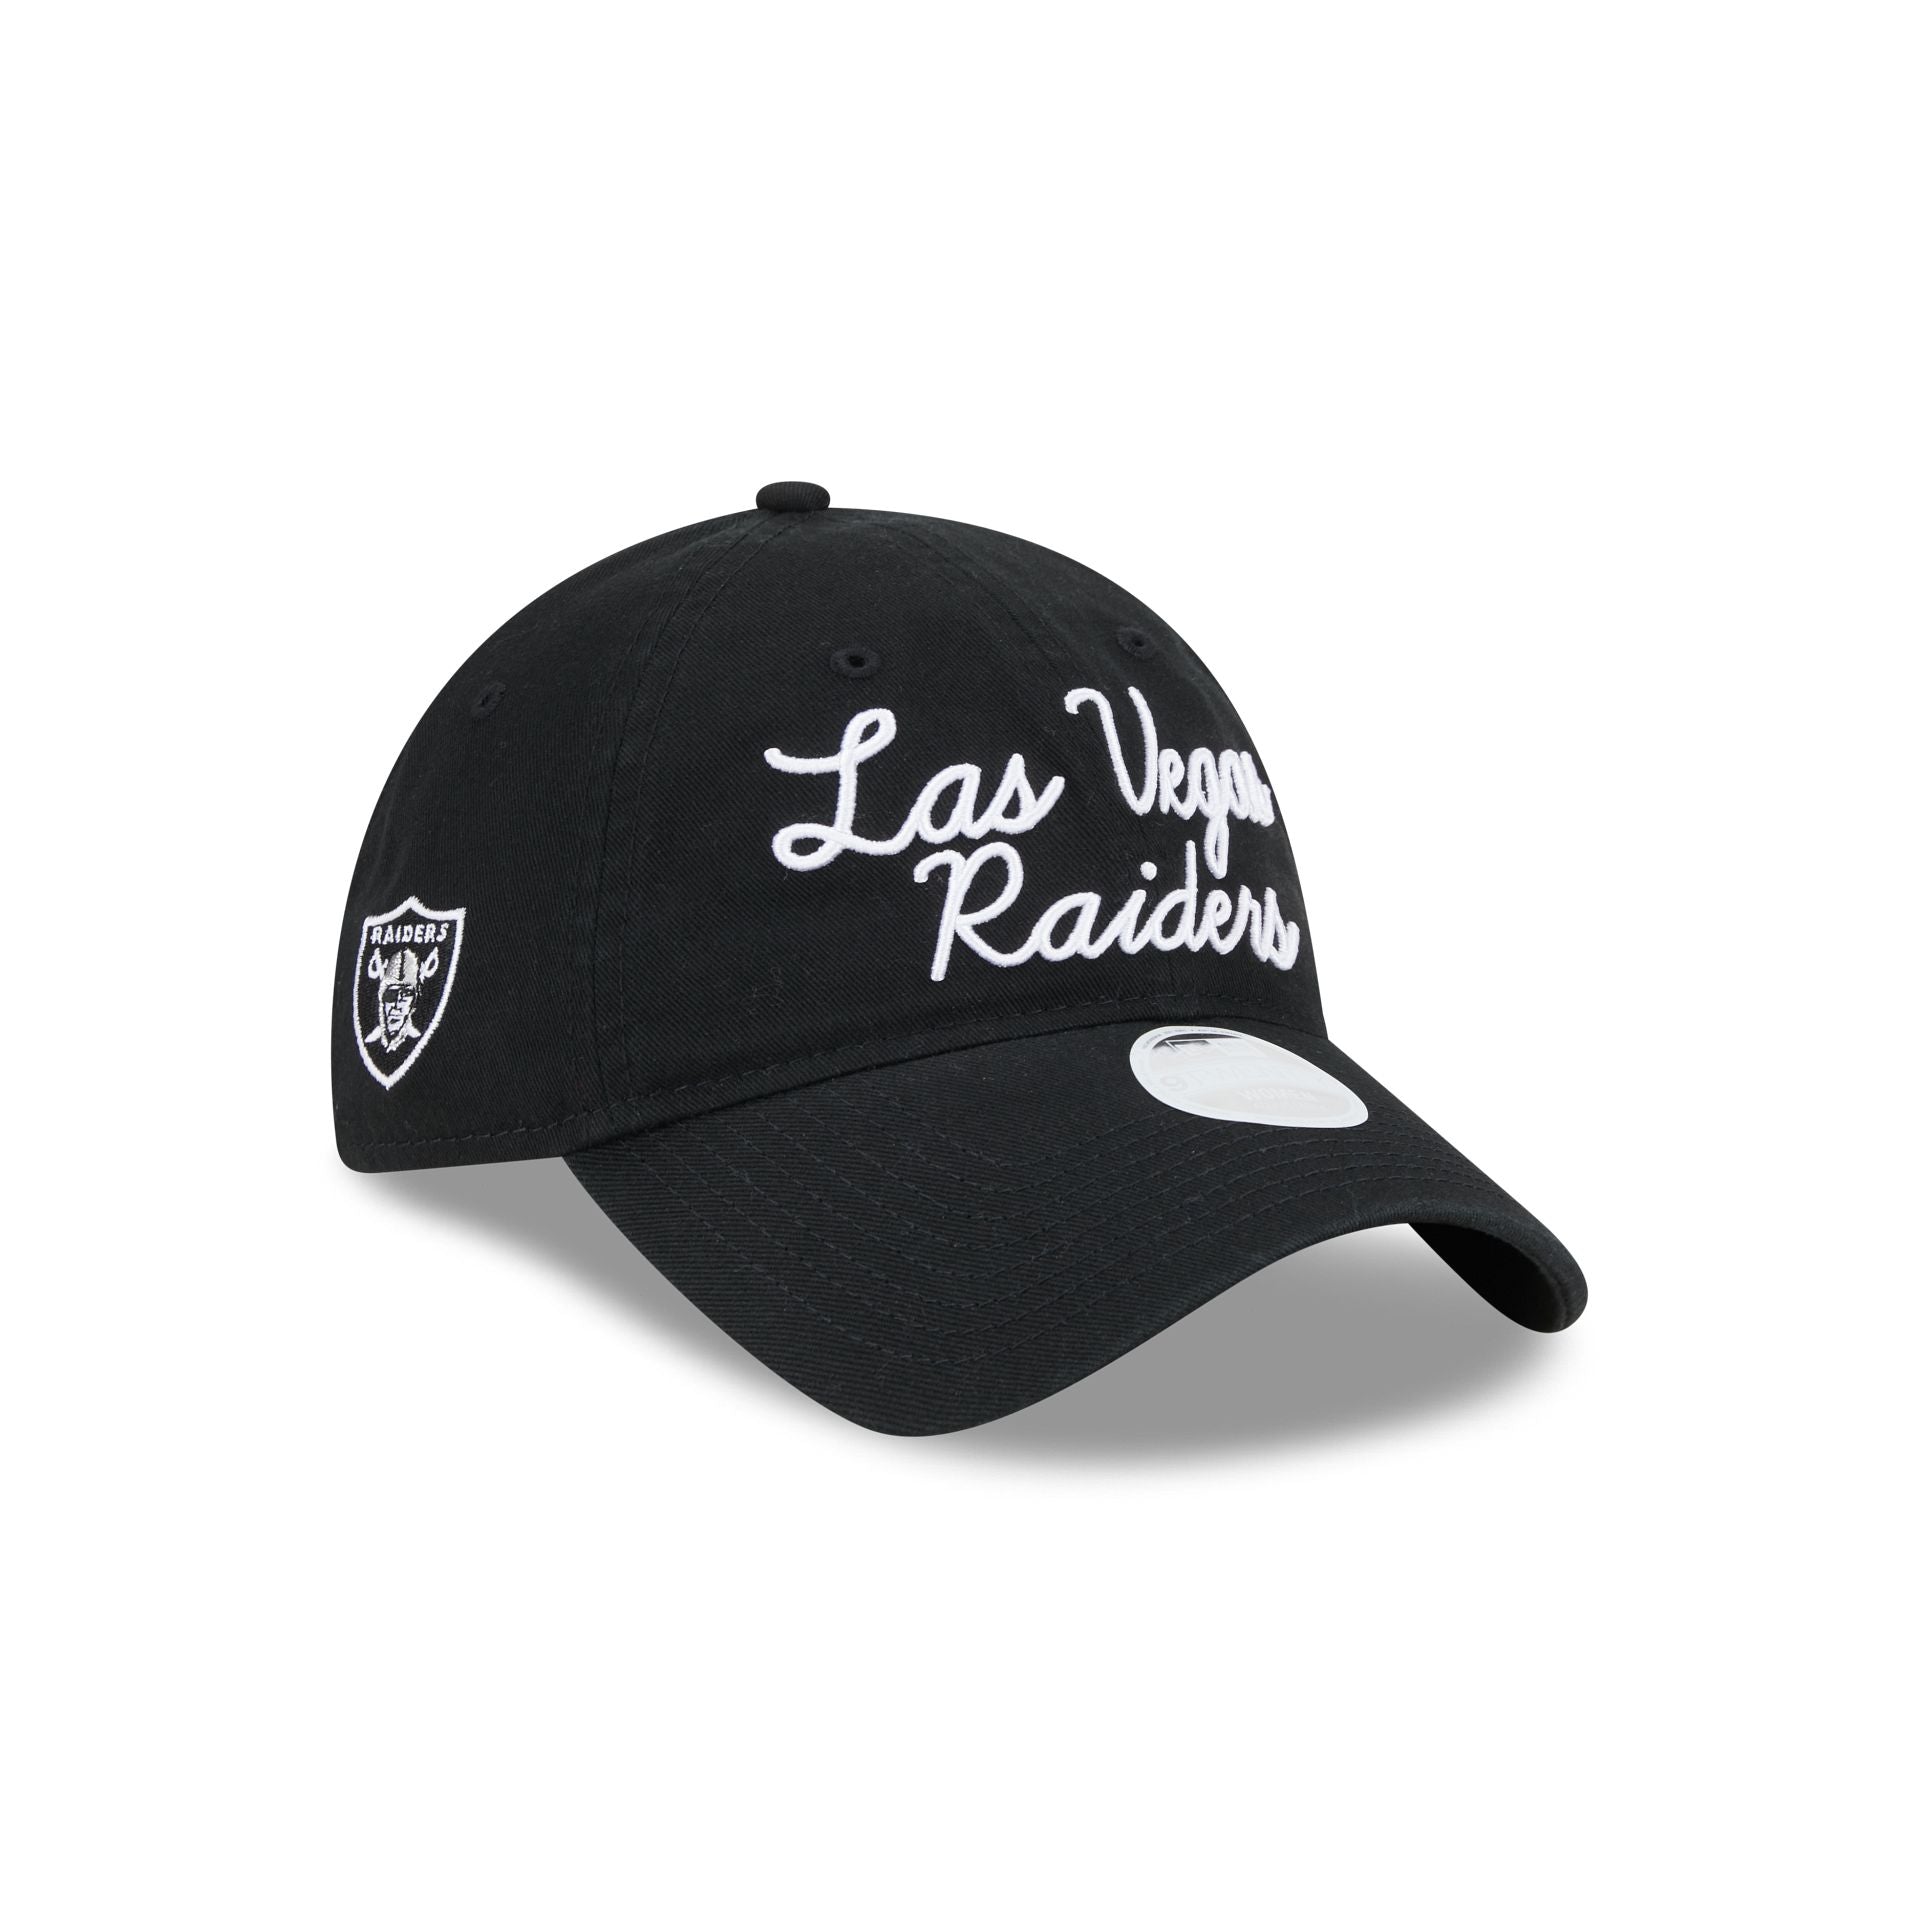 lv raiders hats for women